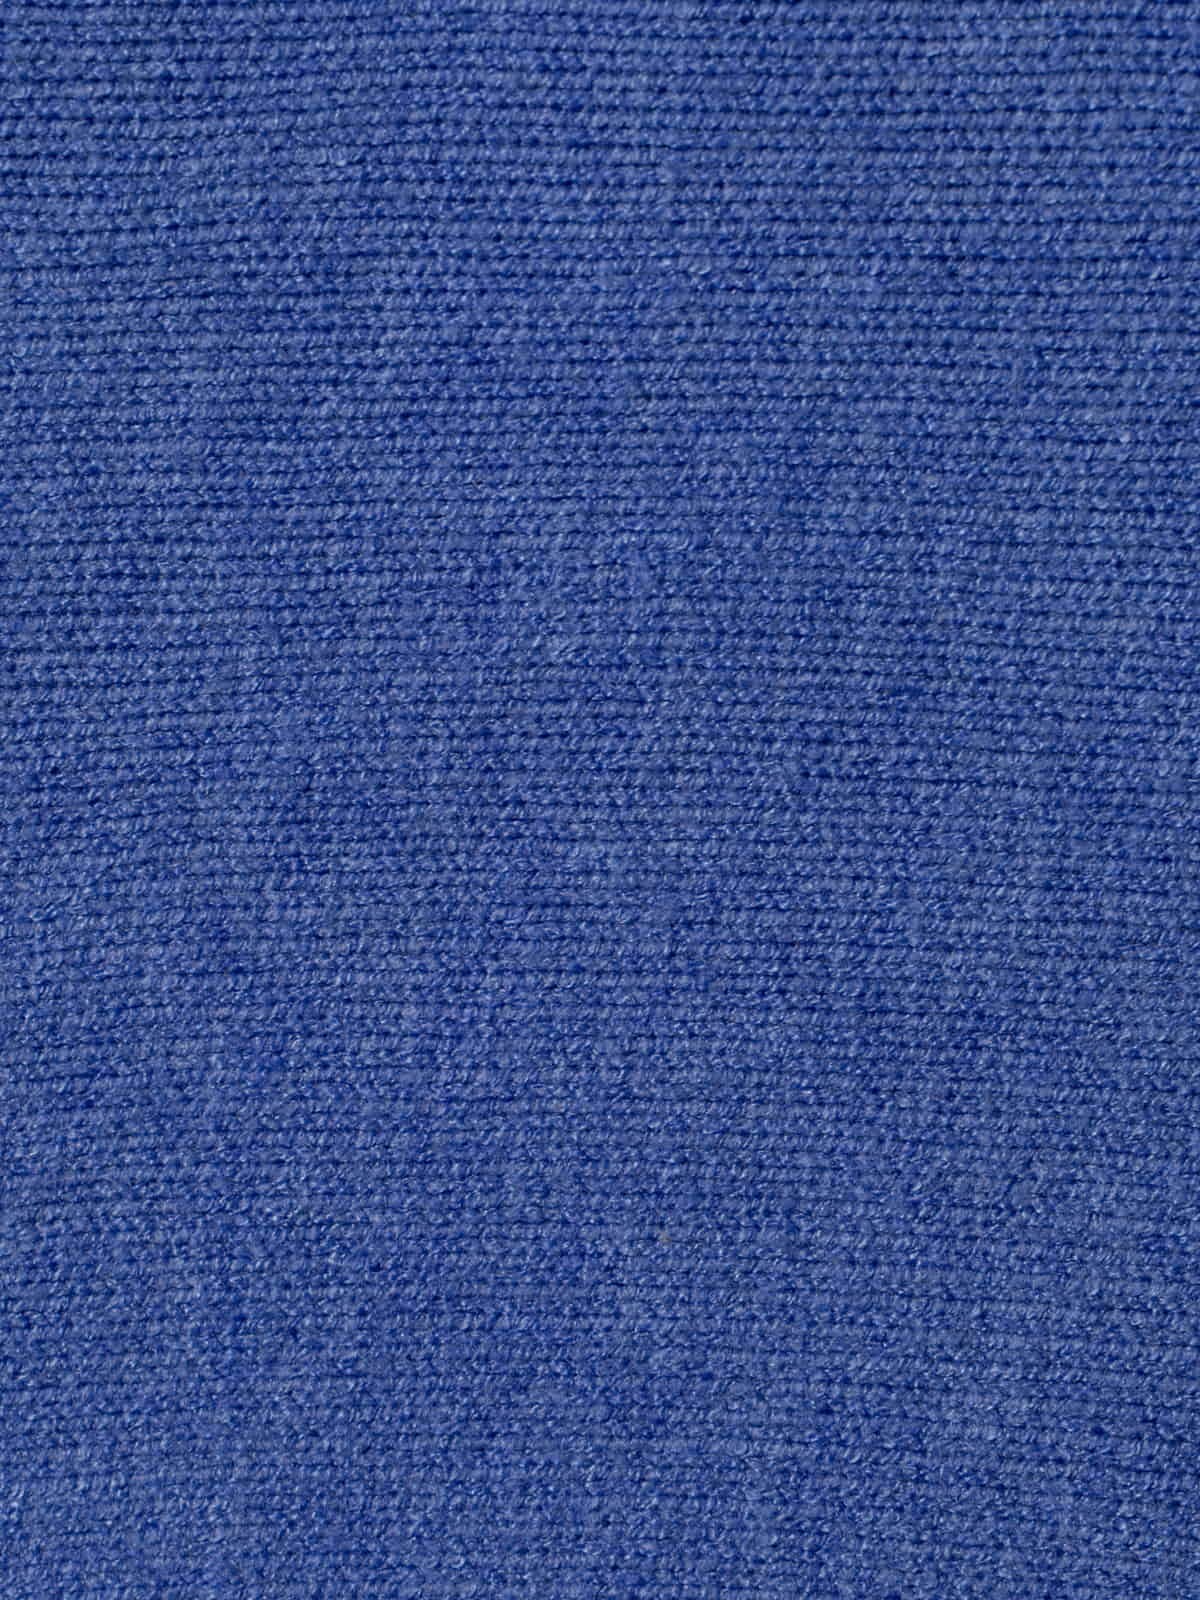 Woman Basic high neck cashmere touch sweater  Bluecolour